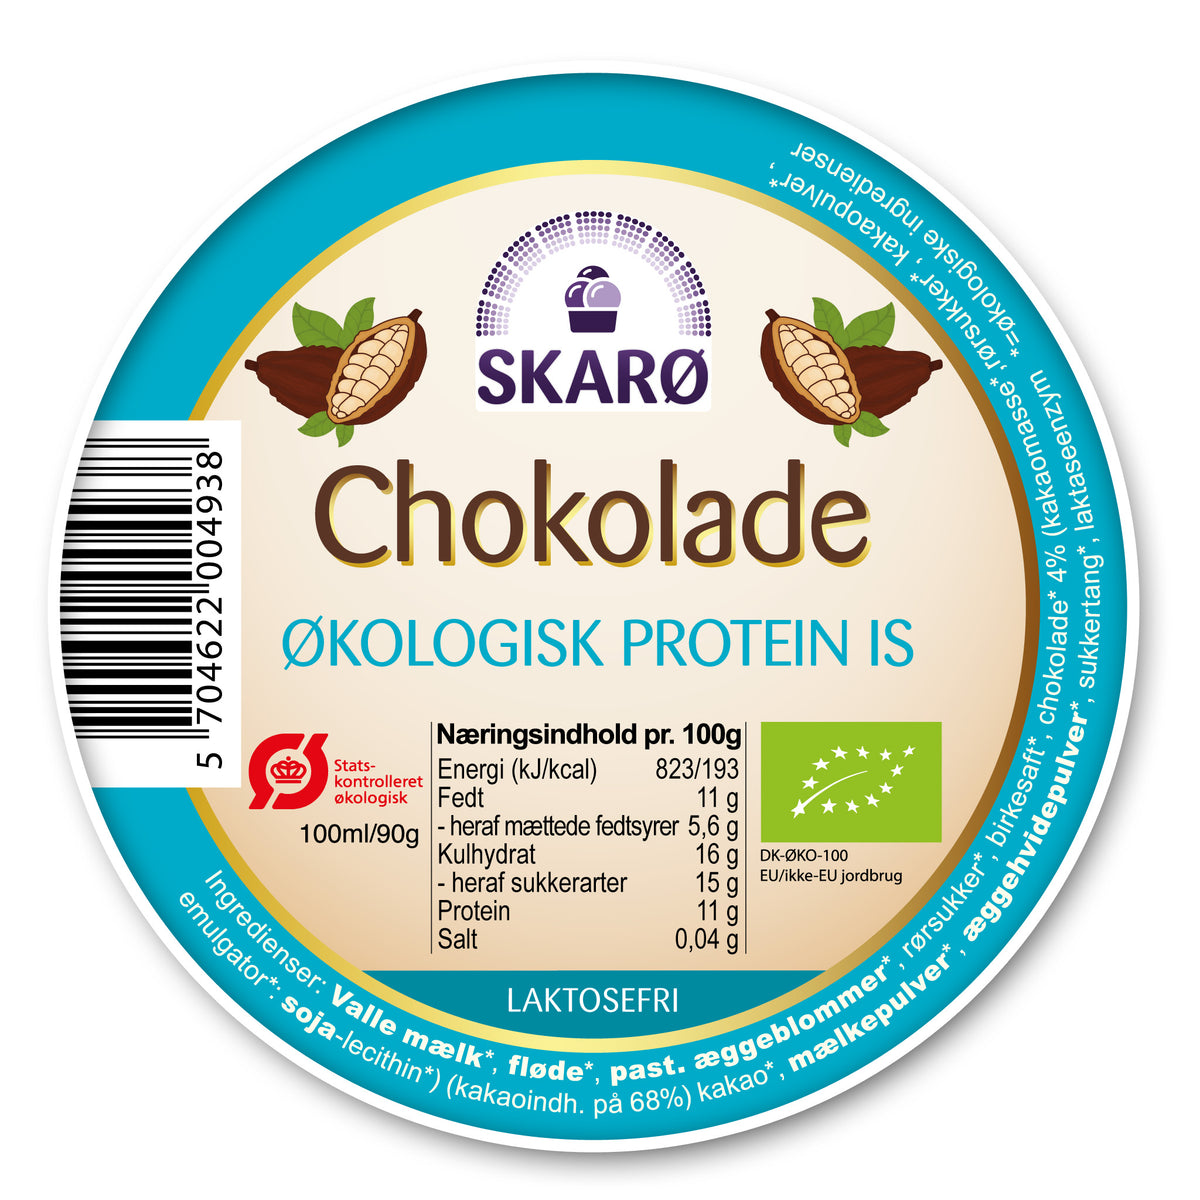 Økologisk Proteinis med Chokolade fra Skarø